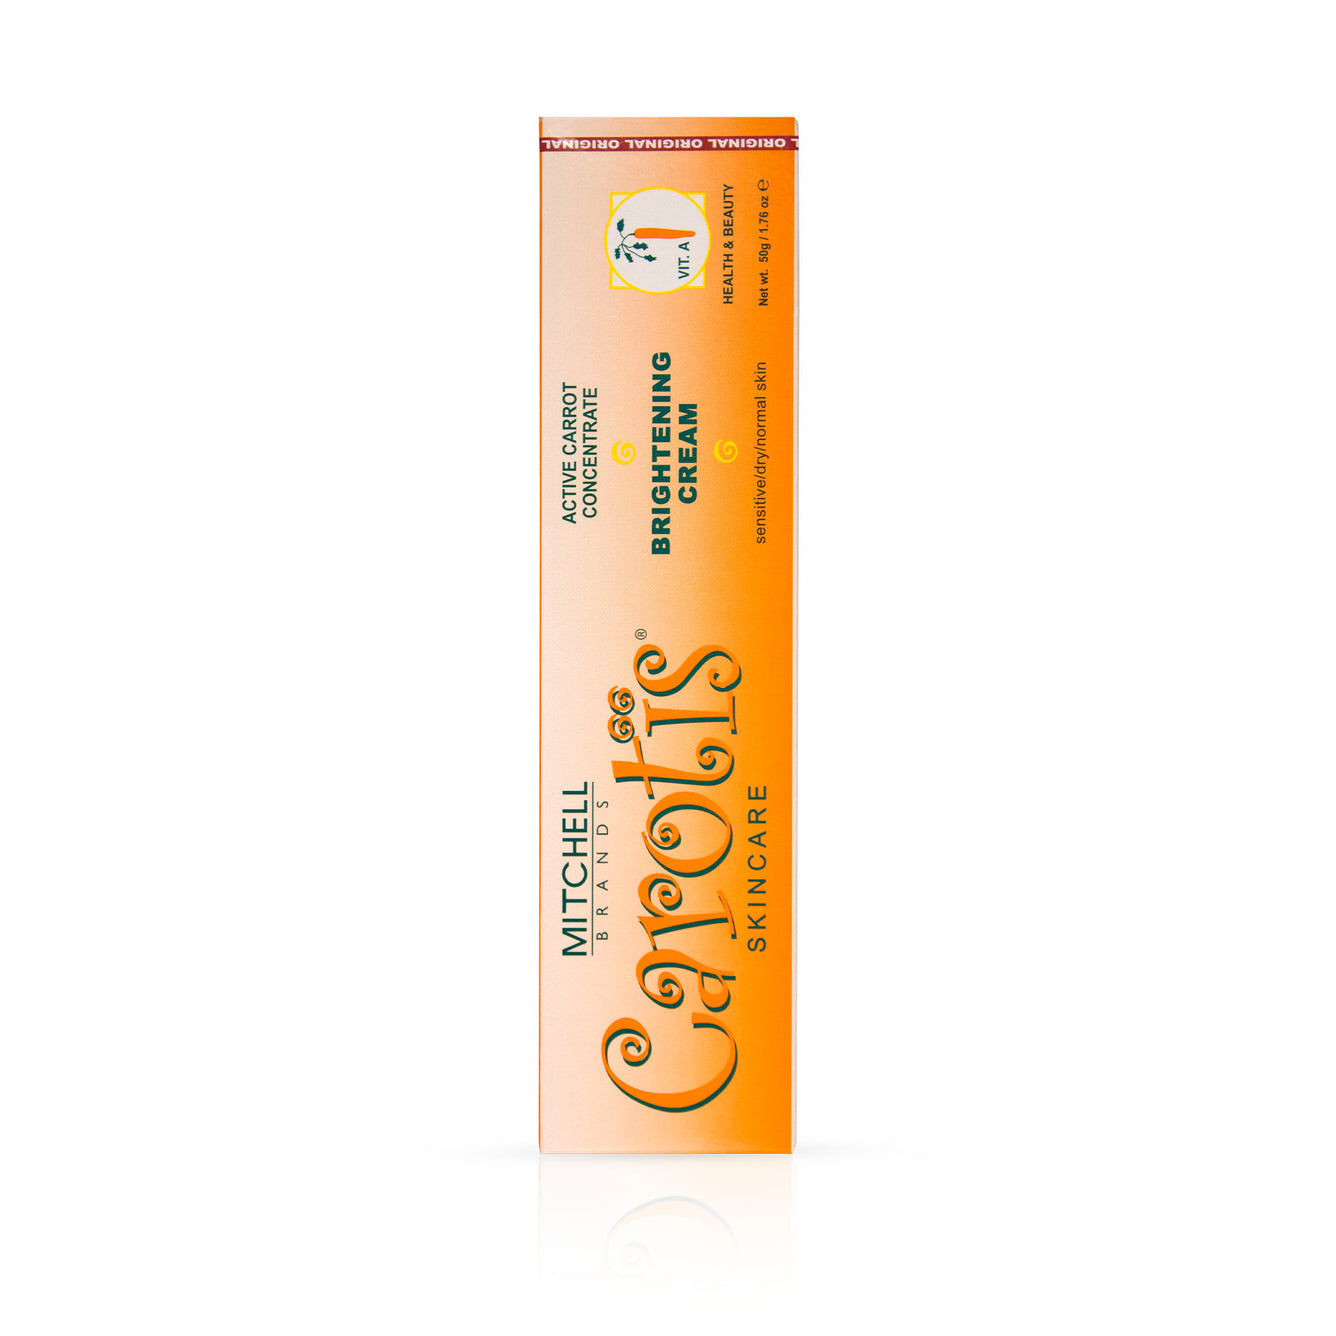 Carotis Brightening Cream 50gr (tube)